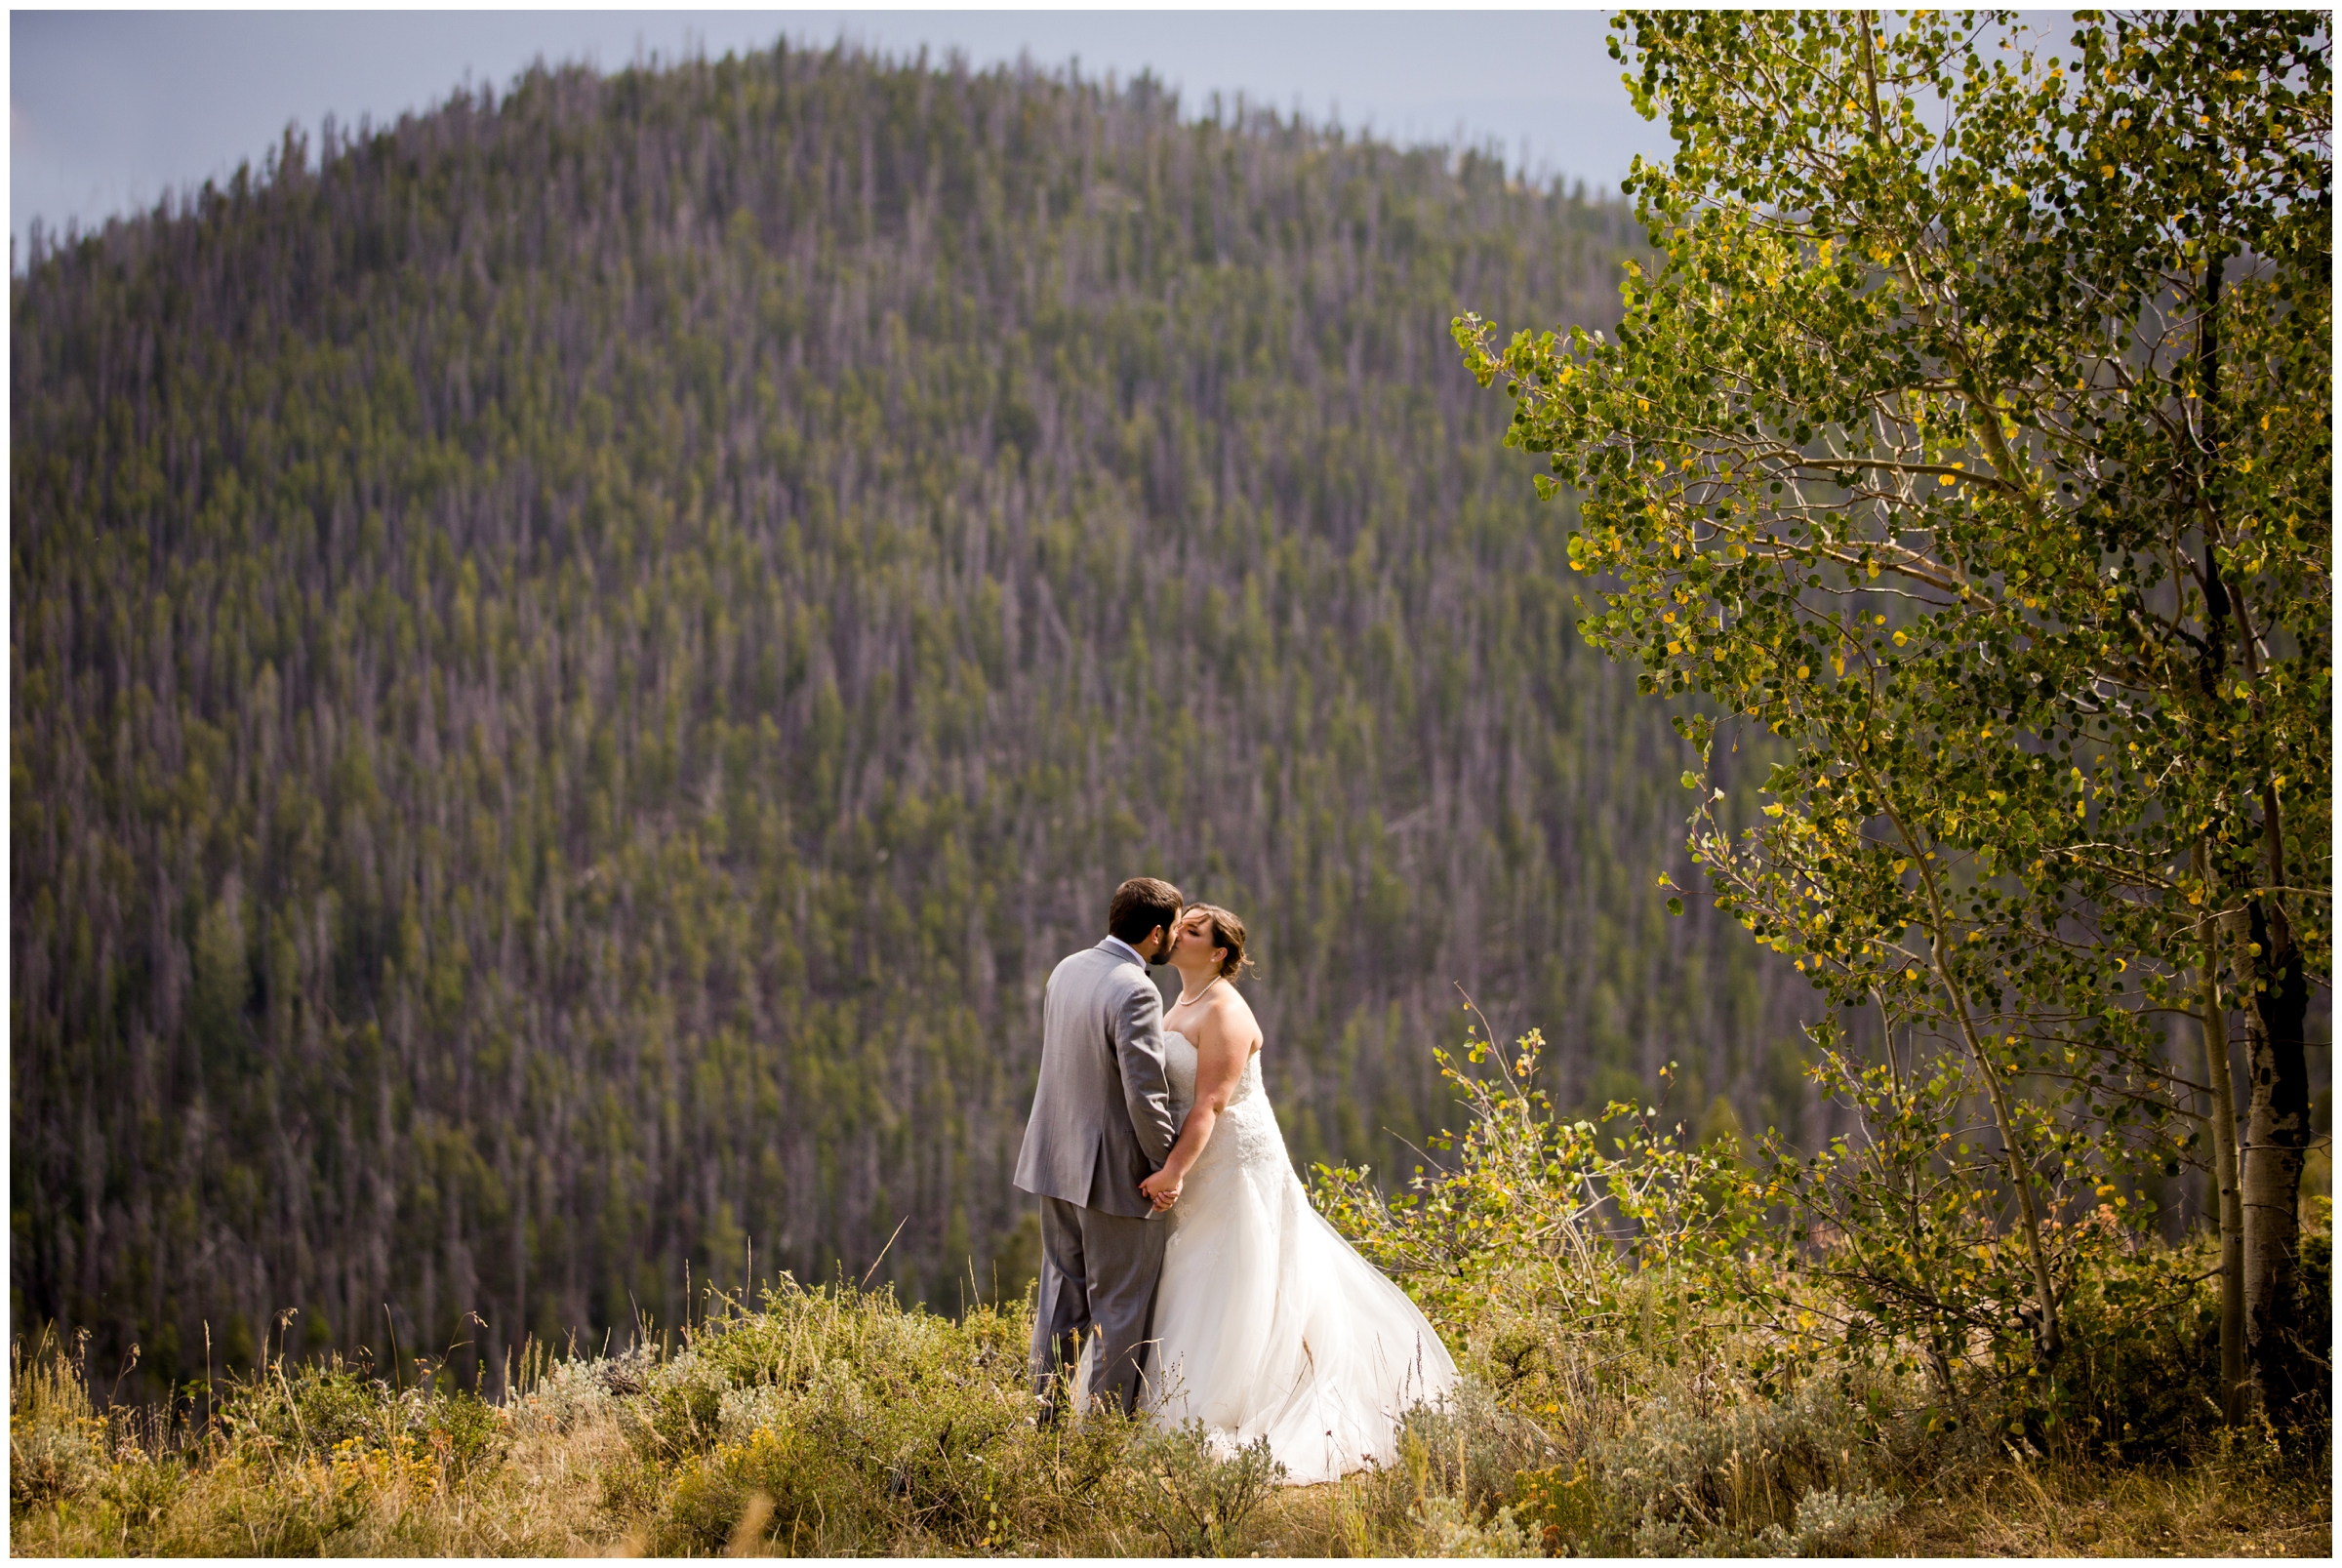 Granby Colorado wedding pictures at the ski resort 